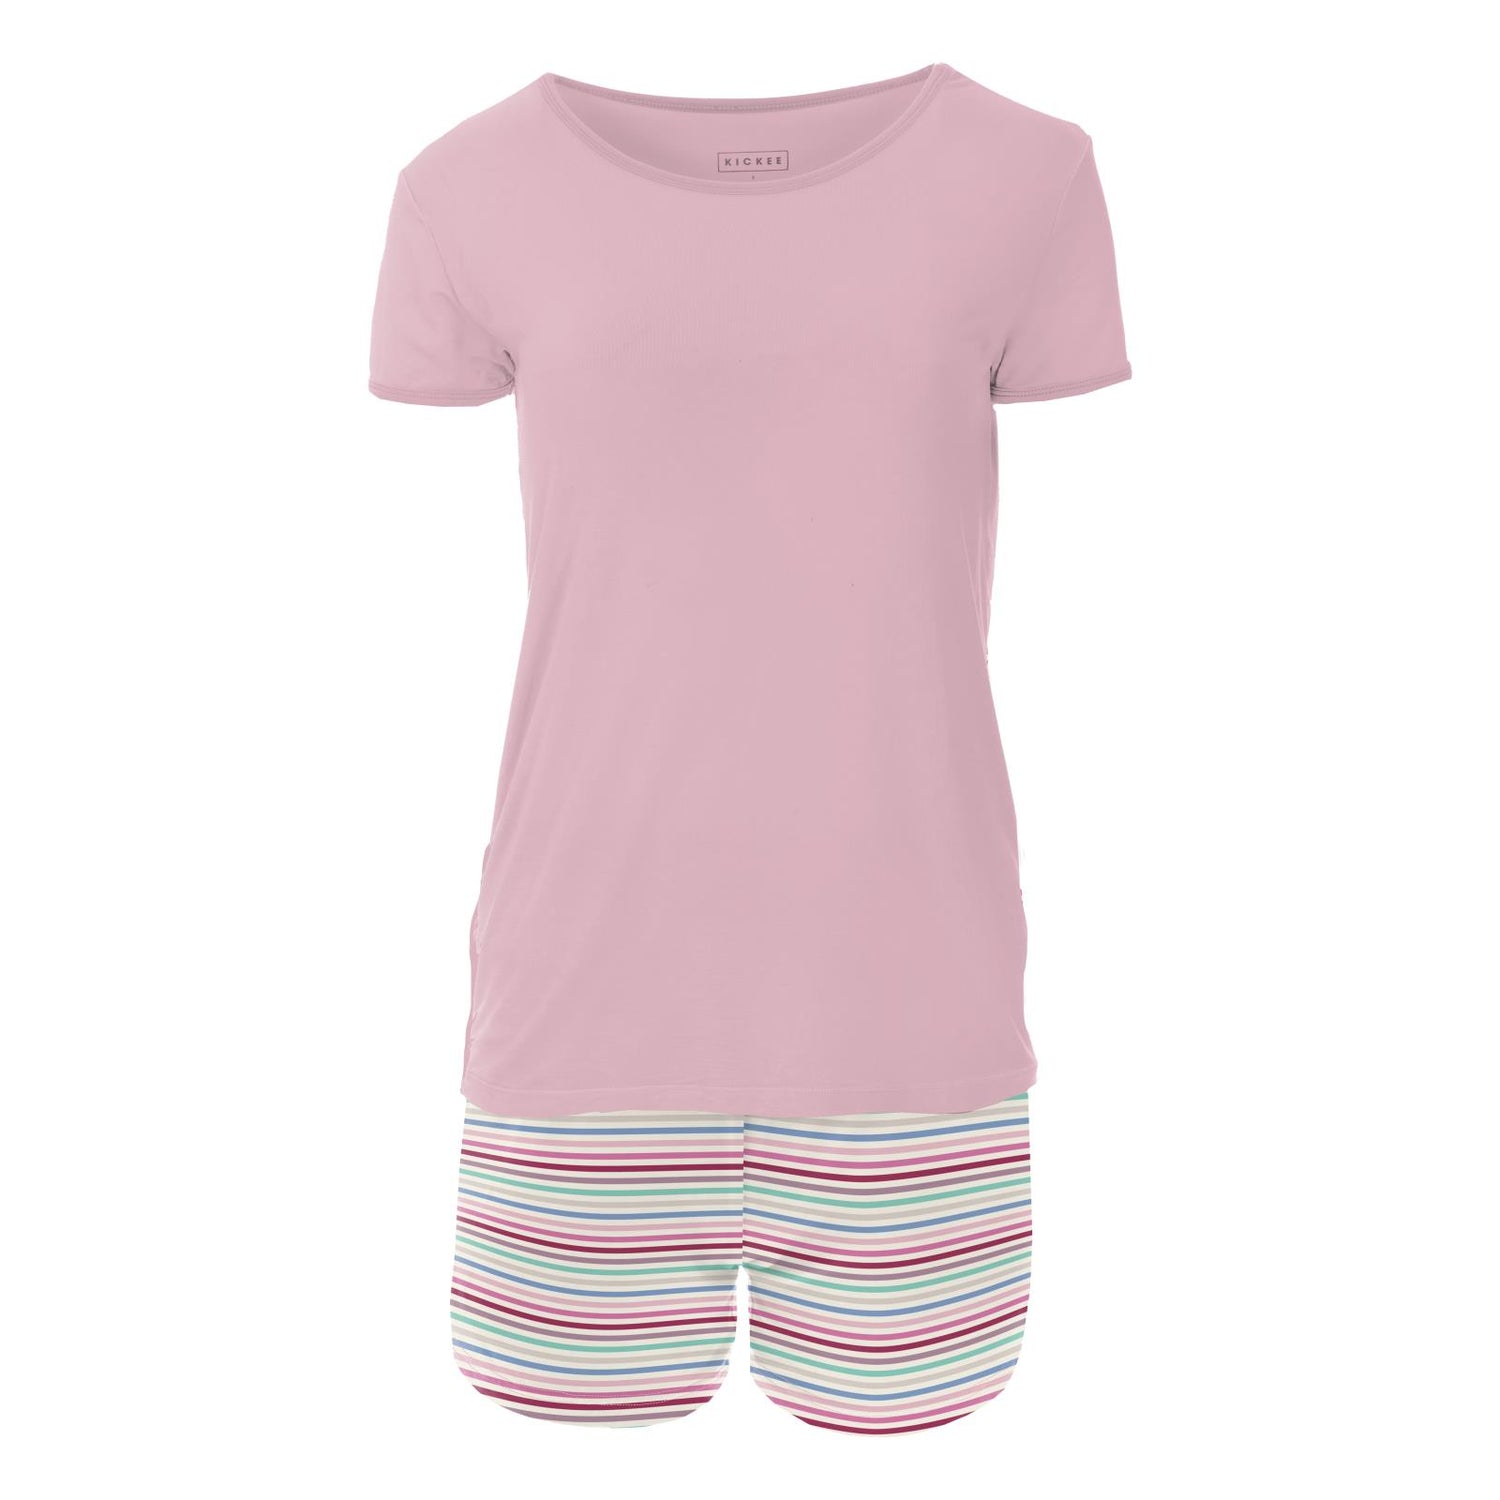 Women's Print Short Sleeve Pajama Set with Shorts in Make Believe Stripe